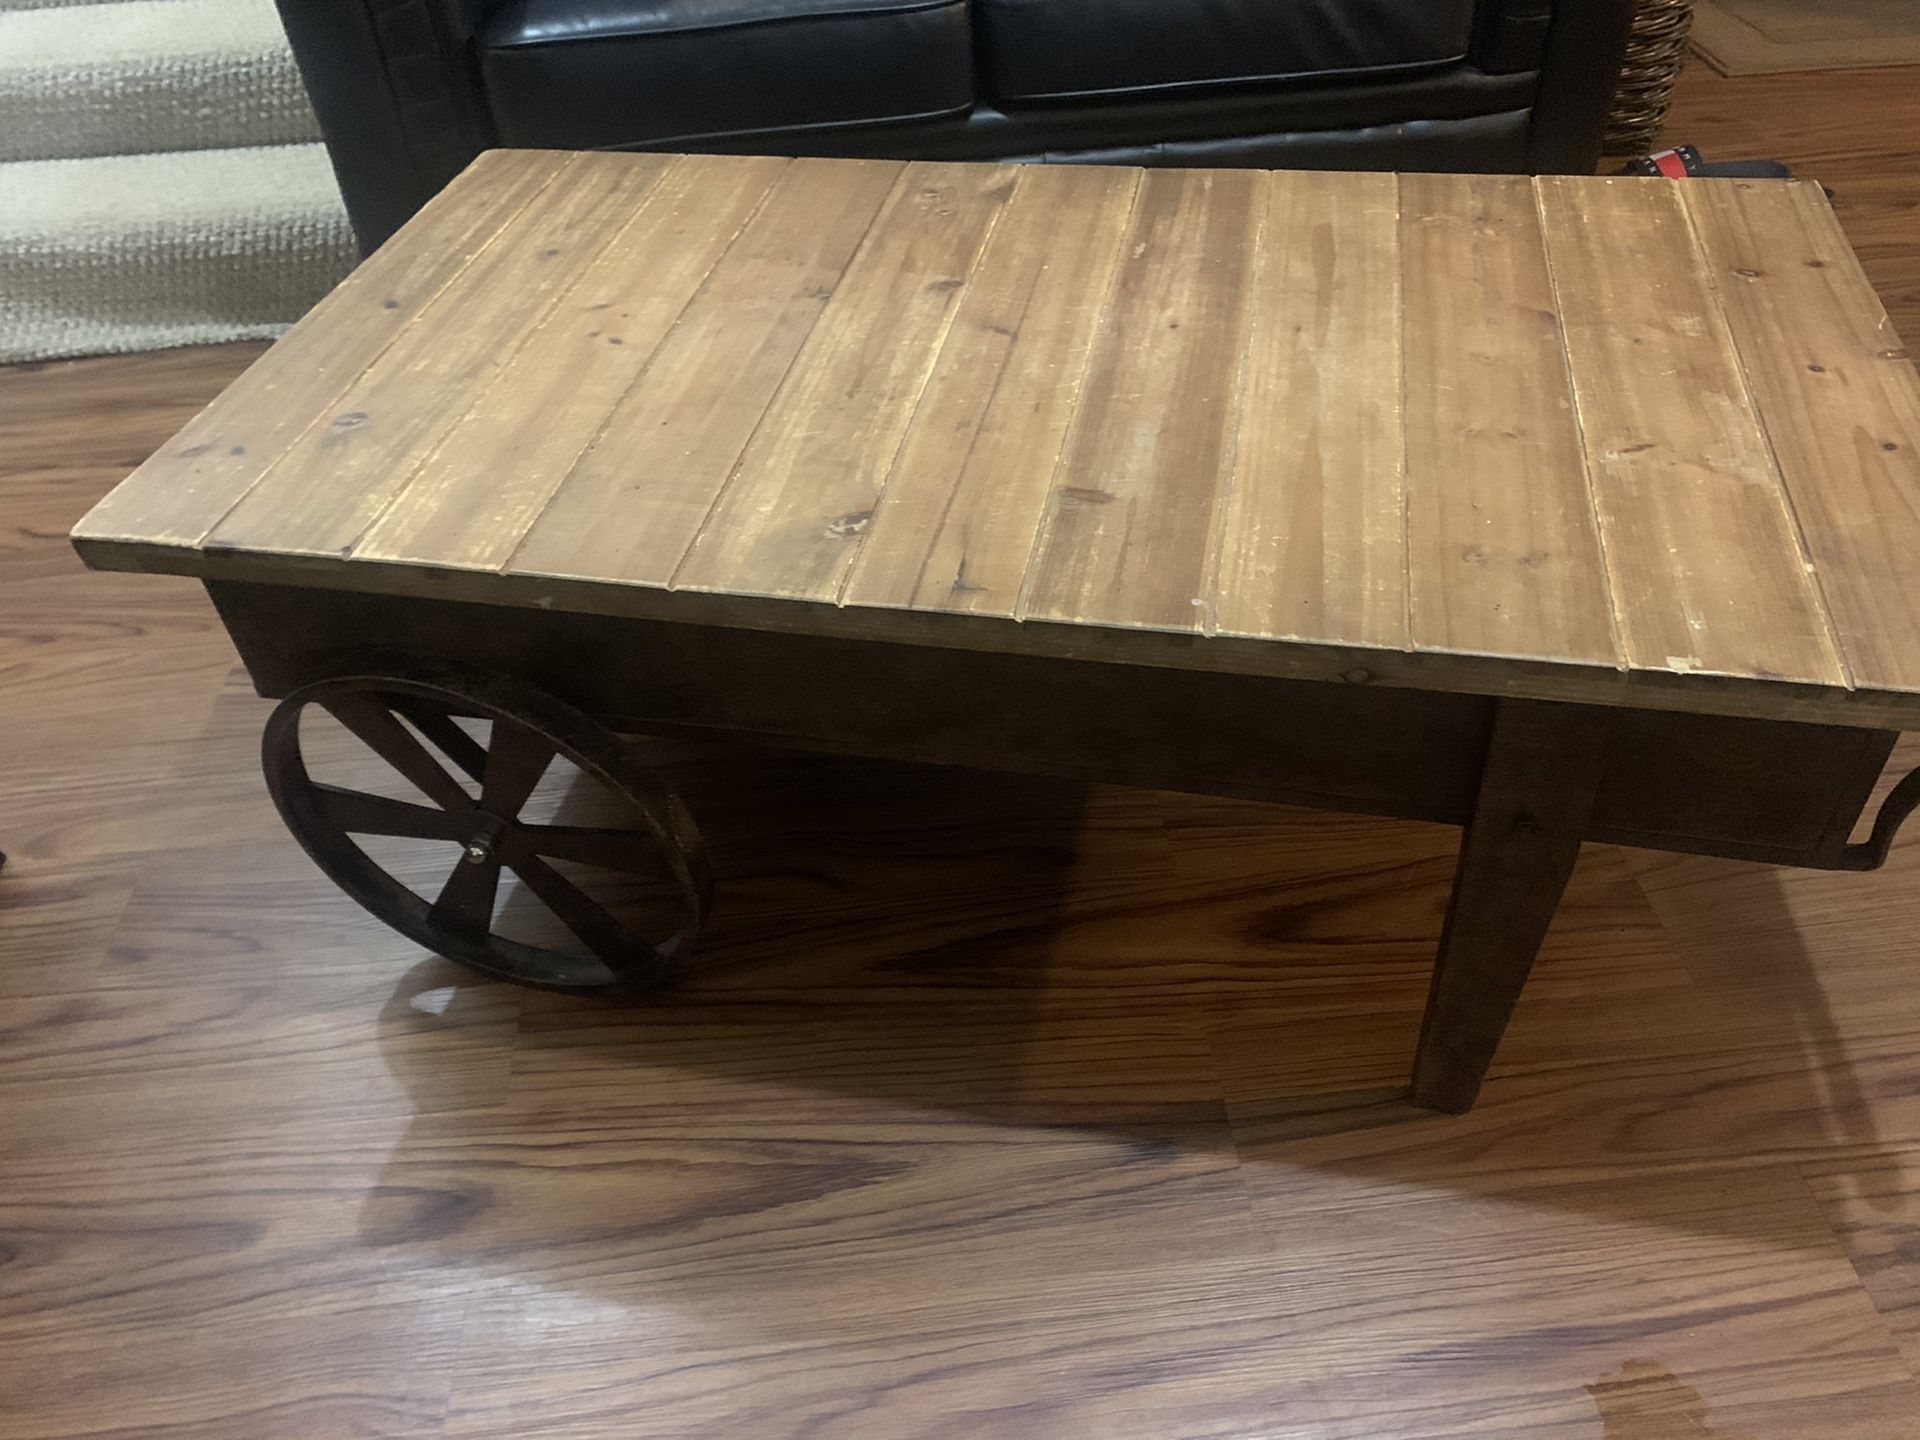 Wheel barrow style coffee table